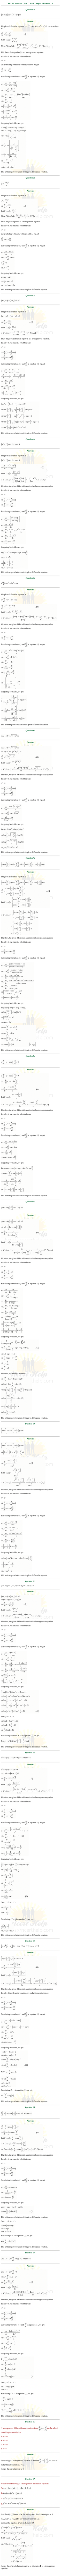 ncert solutions for class 12 Math Chapter 9 ex.9.5